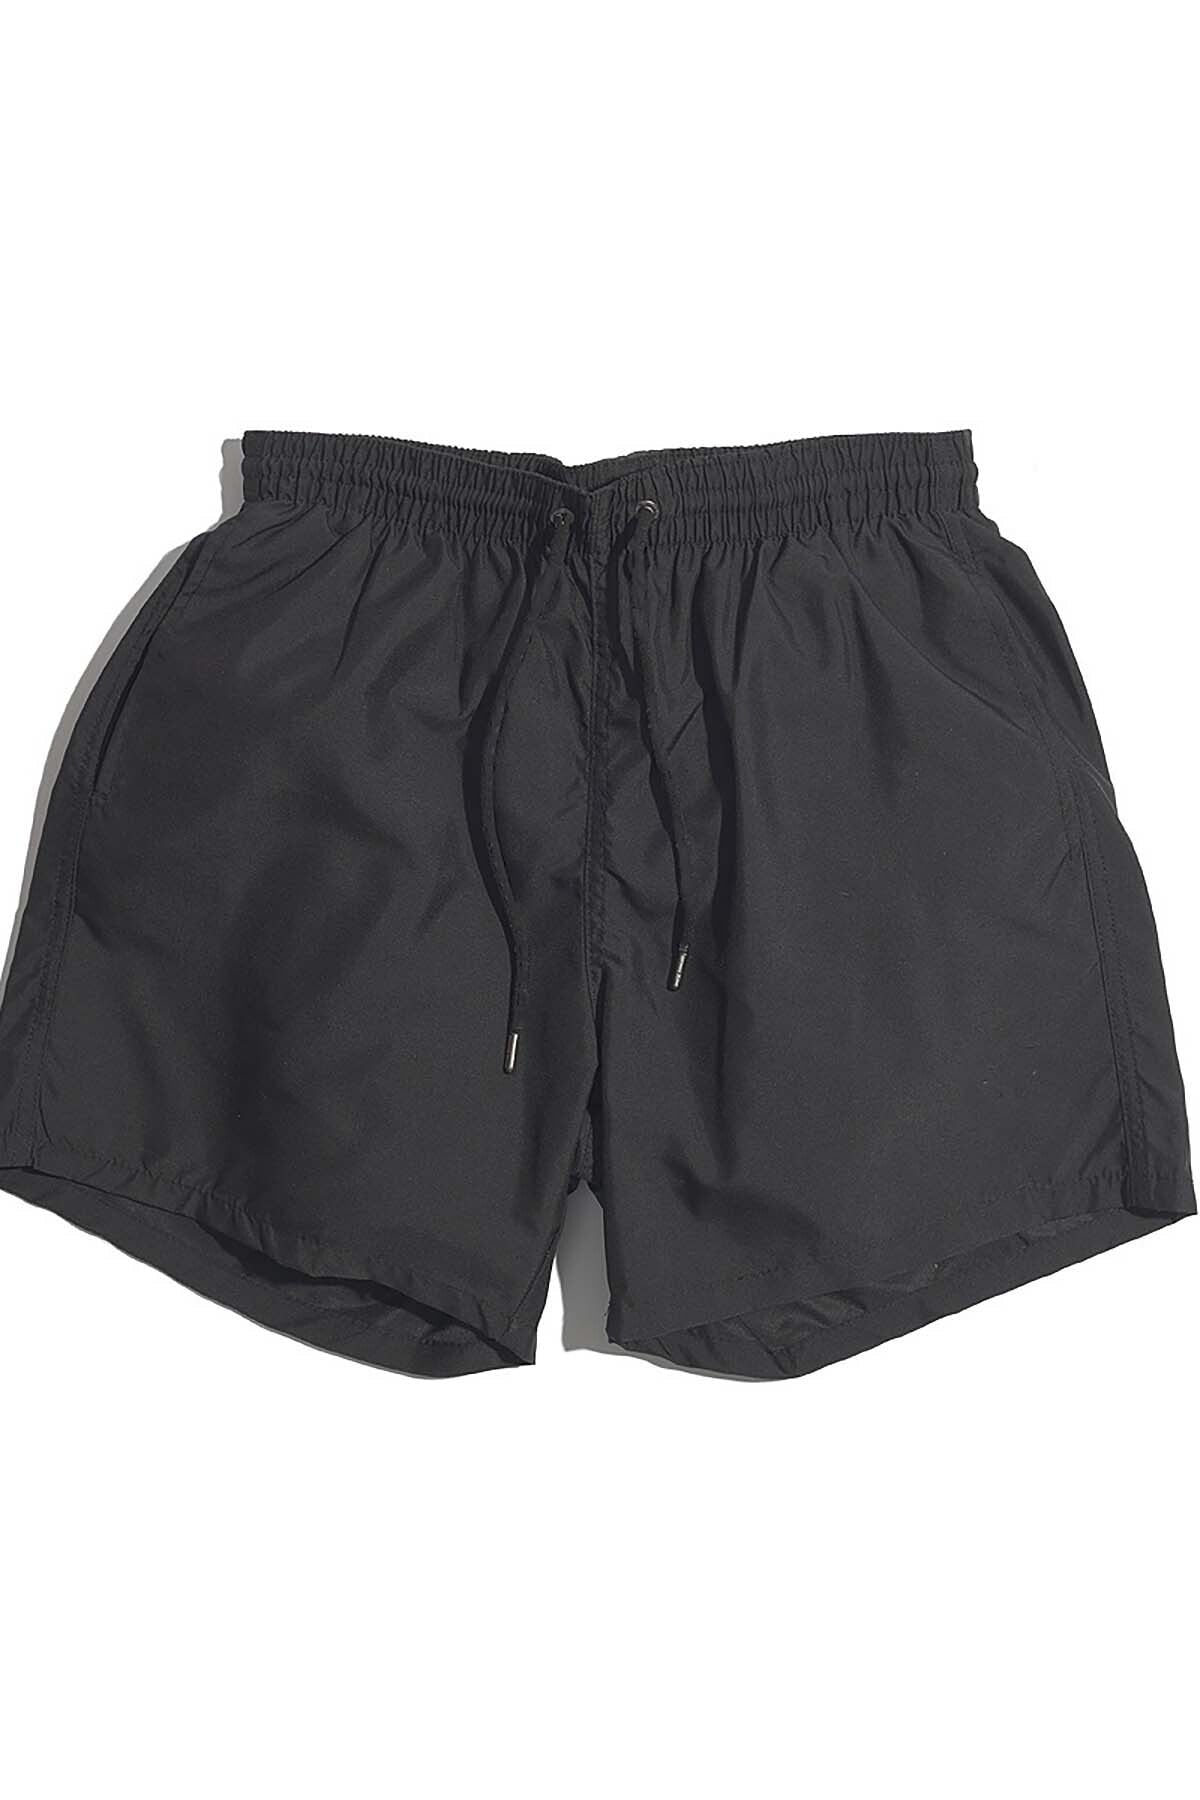 Men's Basic Standard Size Swimwear Pocket Sea Shorts